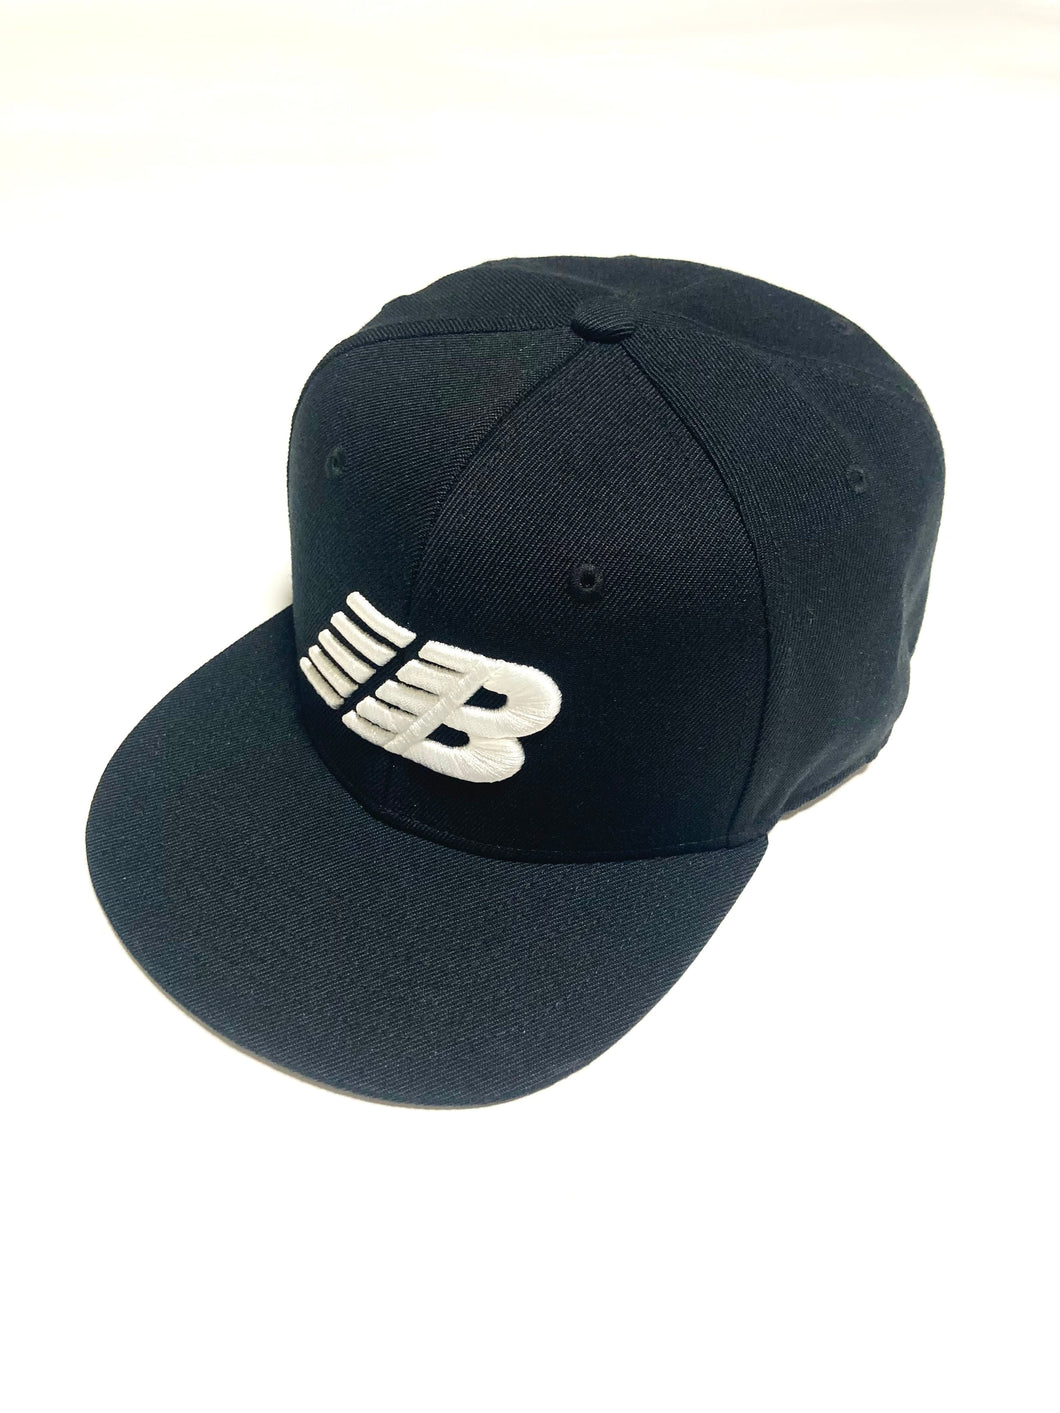 「IB×RHYME SAVER」Baseball Cap-ブラックボディ-前白×後白